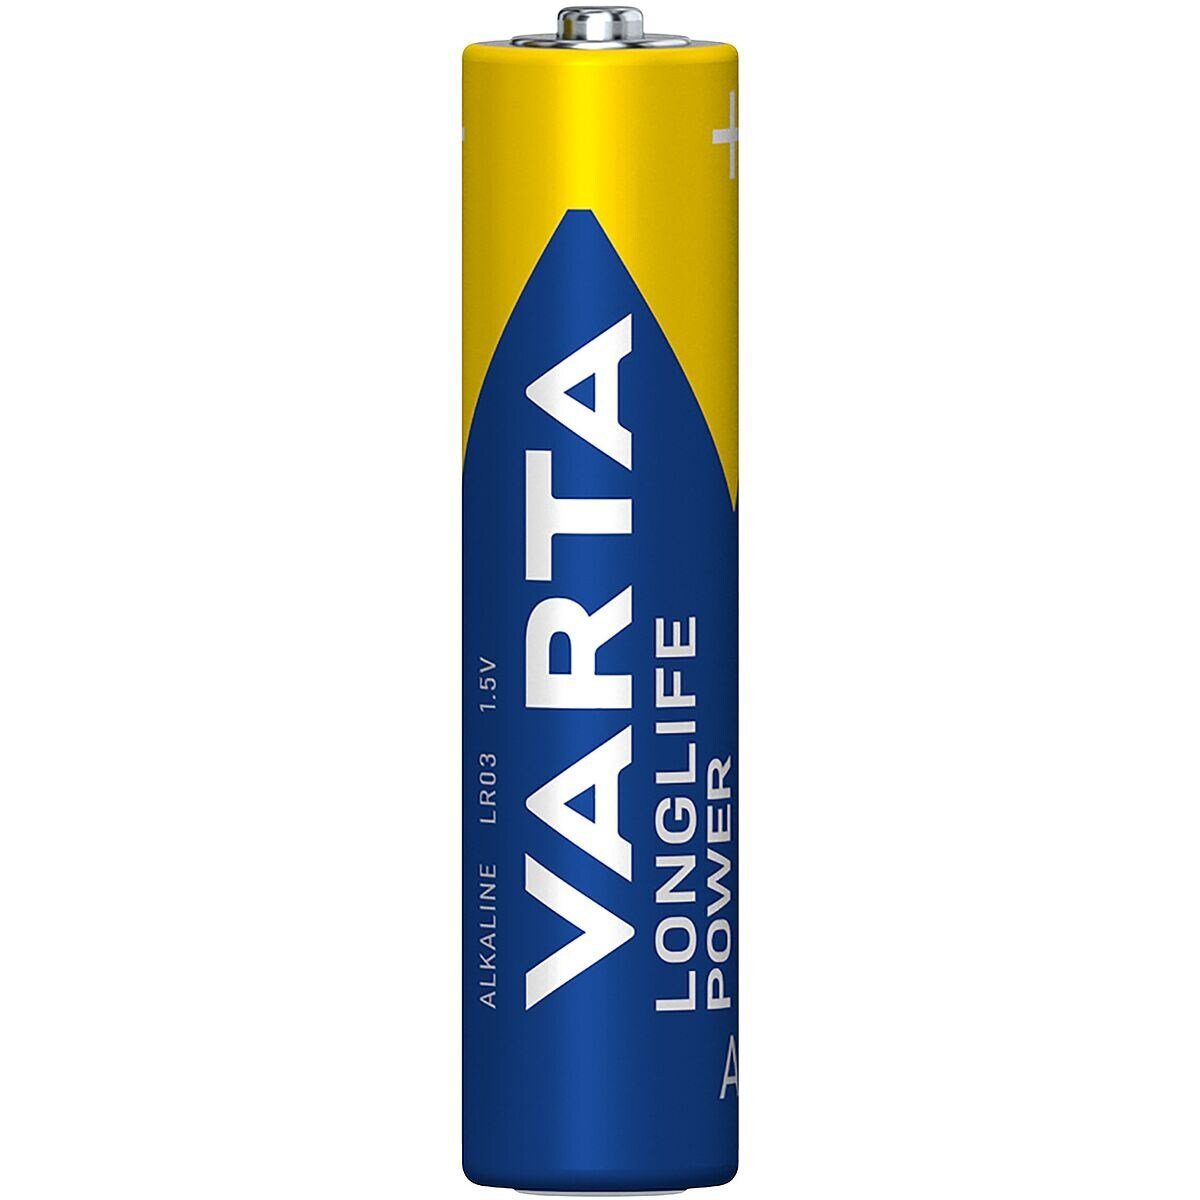 VARTA (4 LONGLIFE langer mit Lebensdauer AAA, St), Batterie, Power